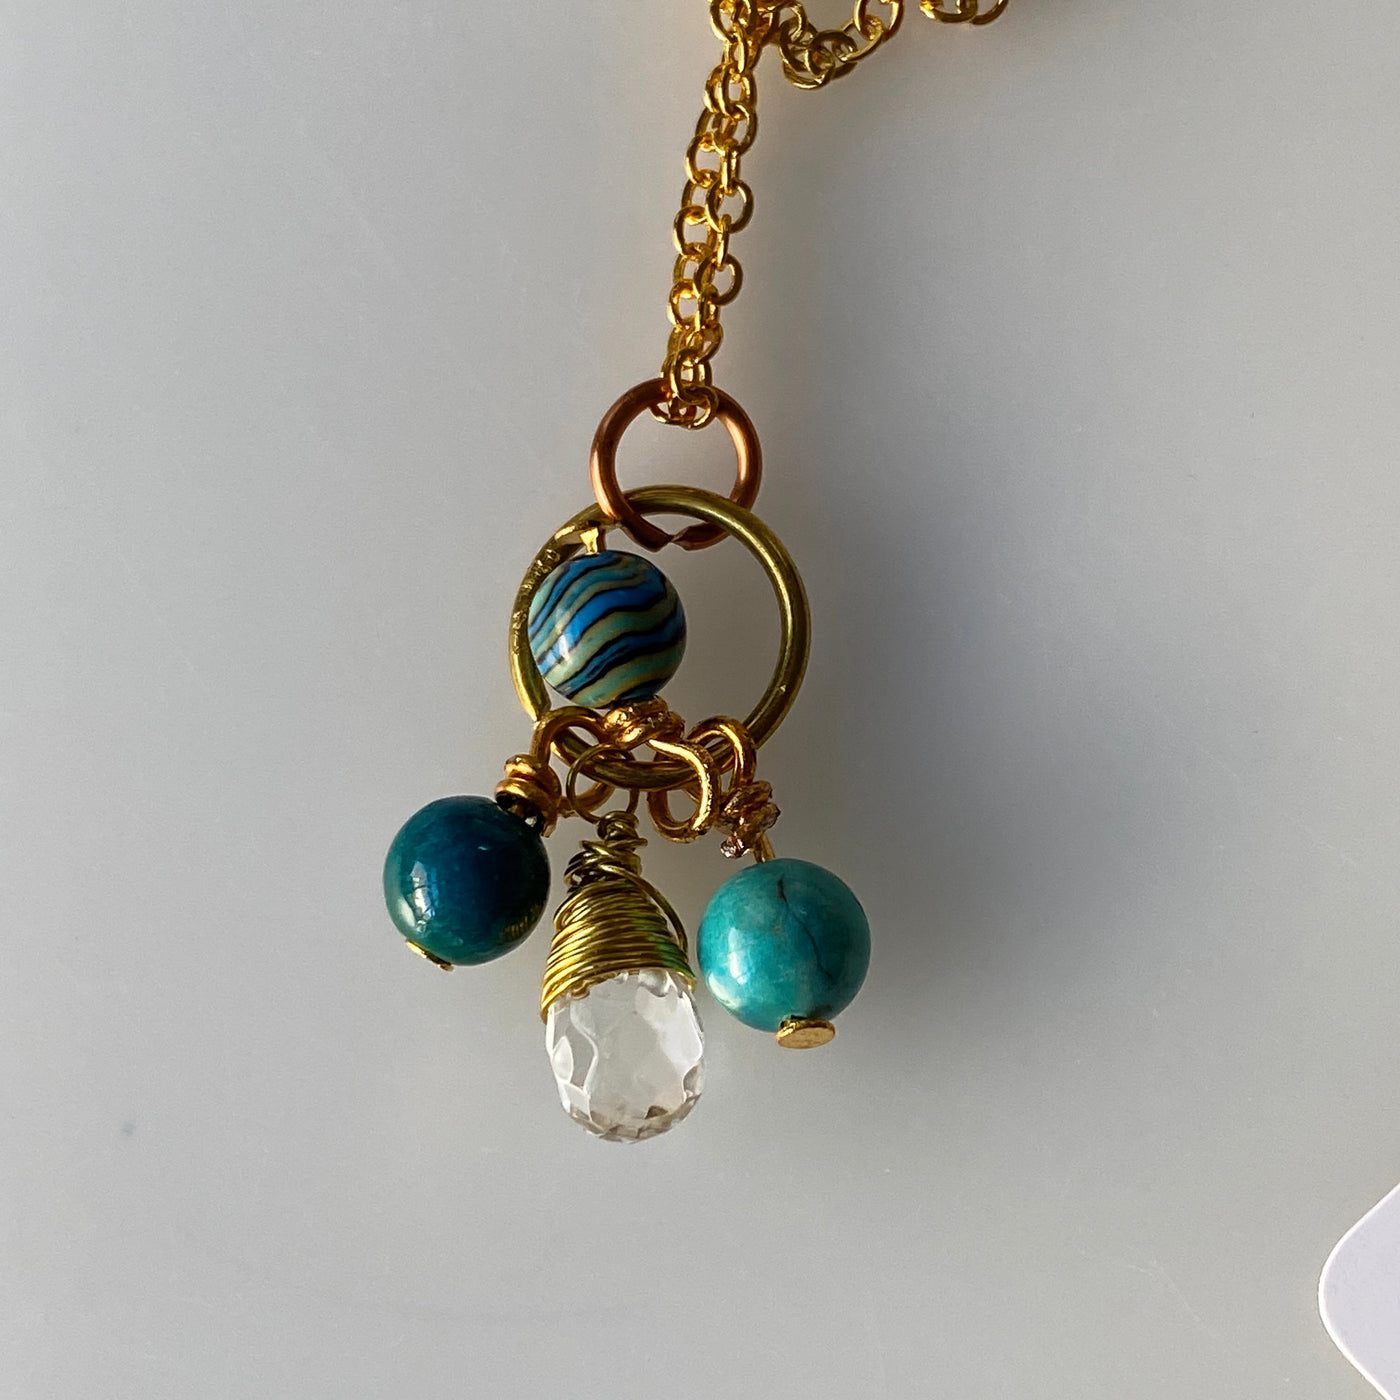 Chrystal briolette, crysocolla, turquoise, blue malachite small pendant.